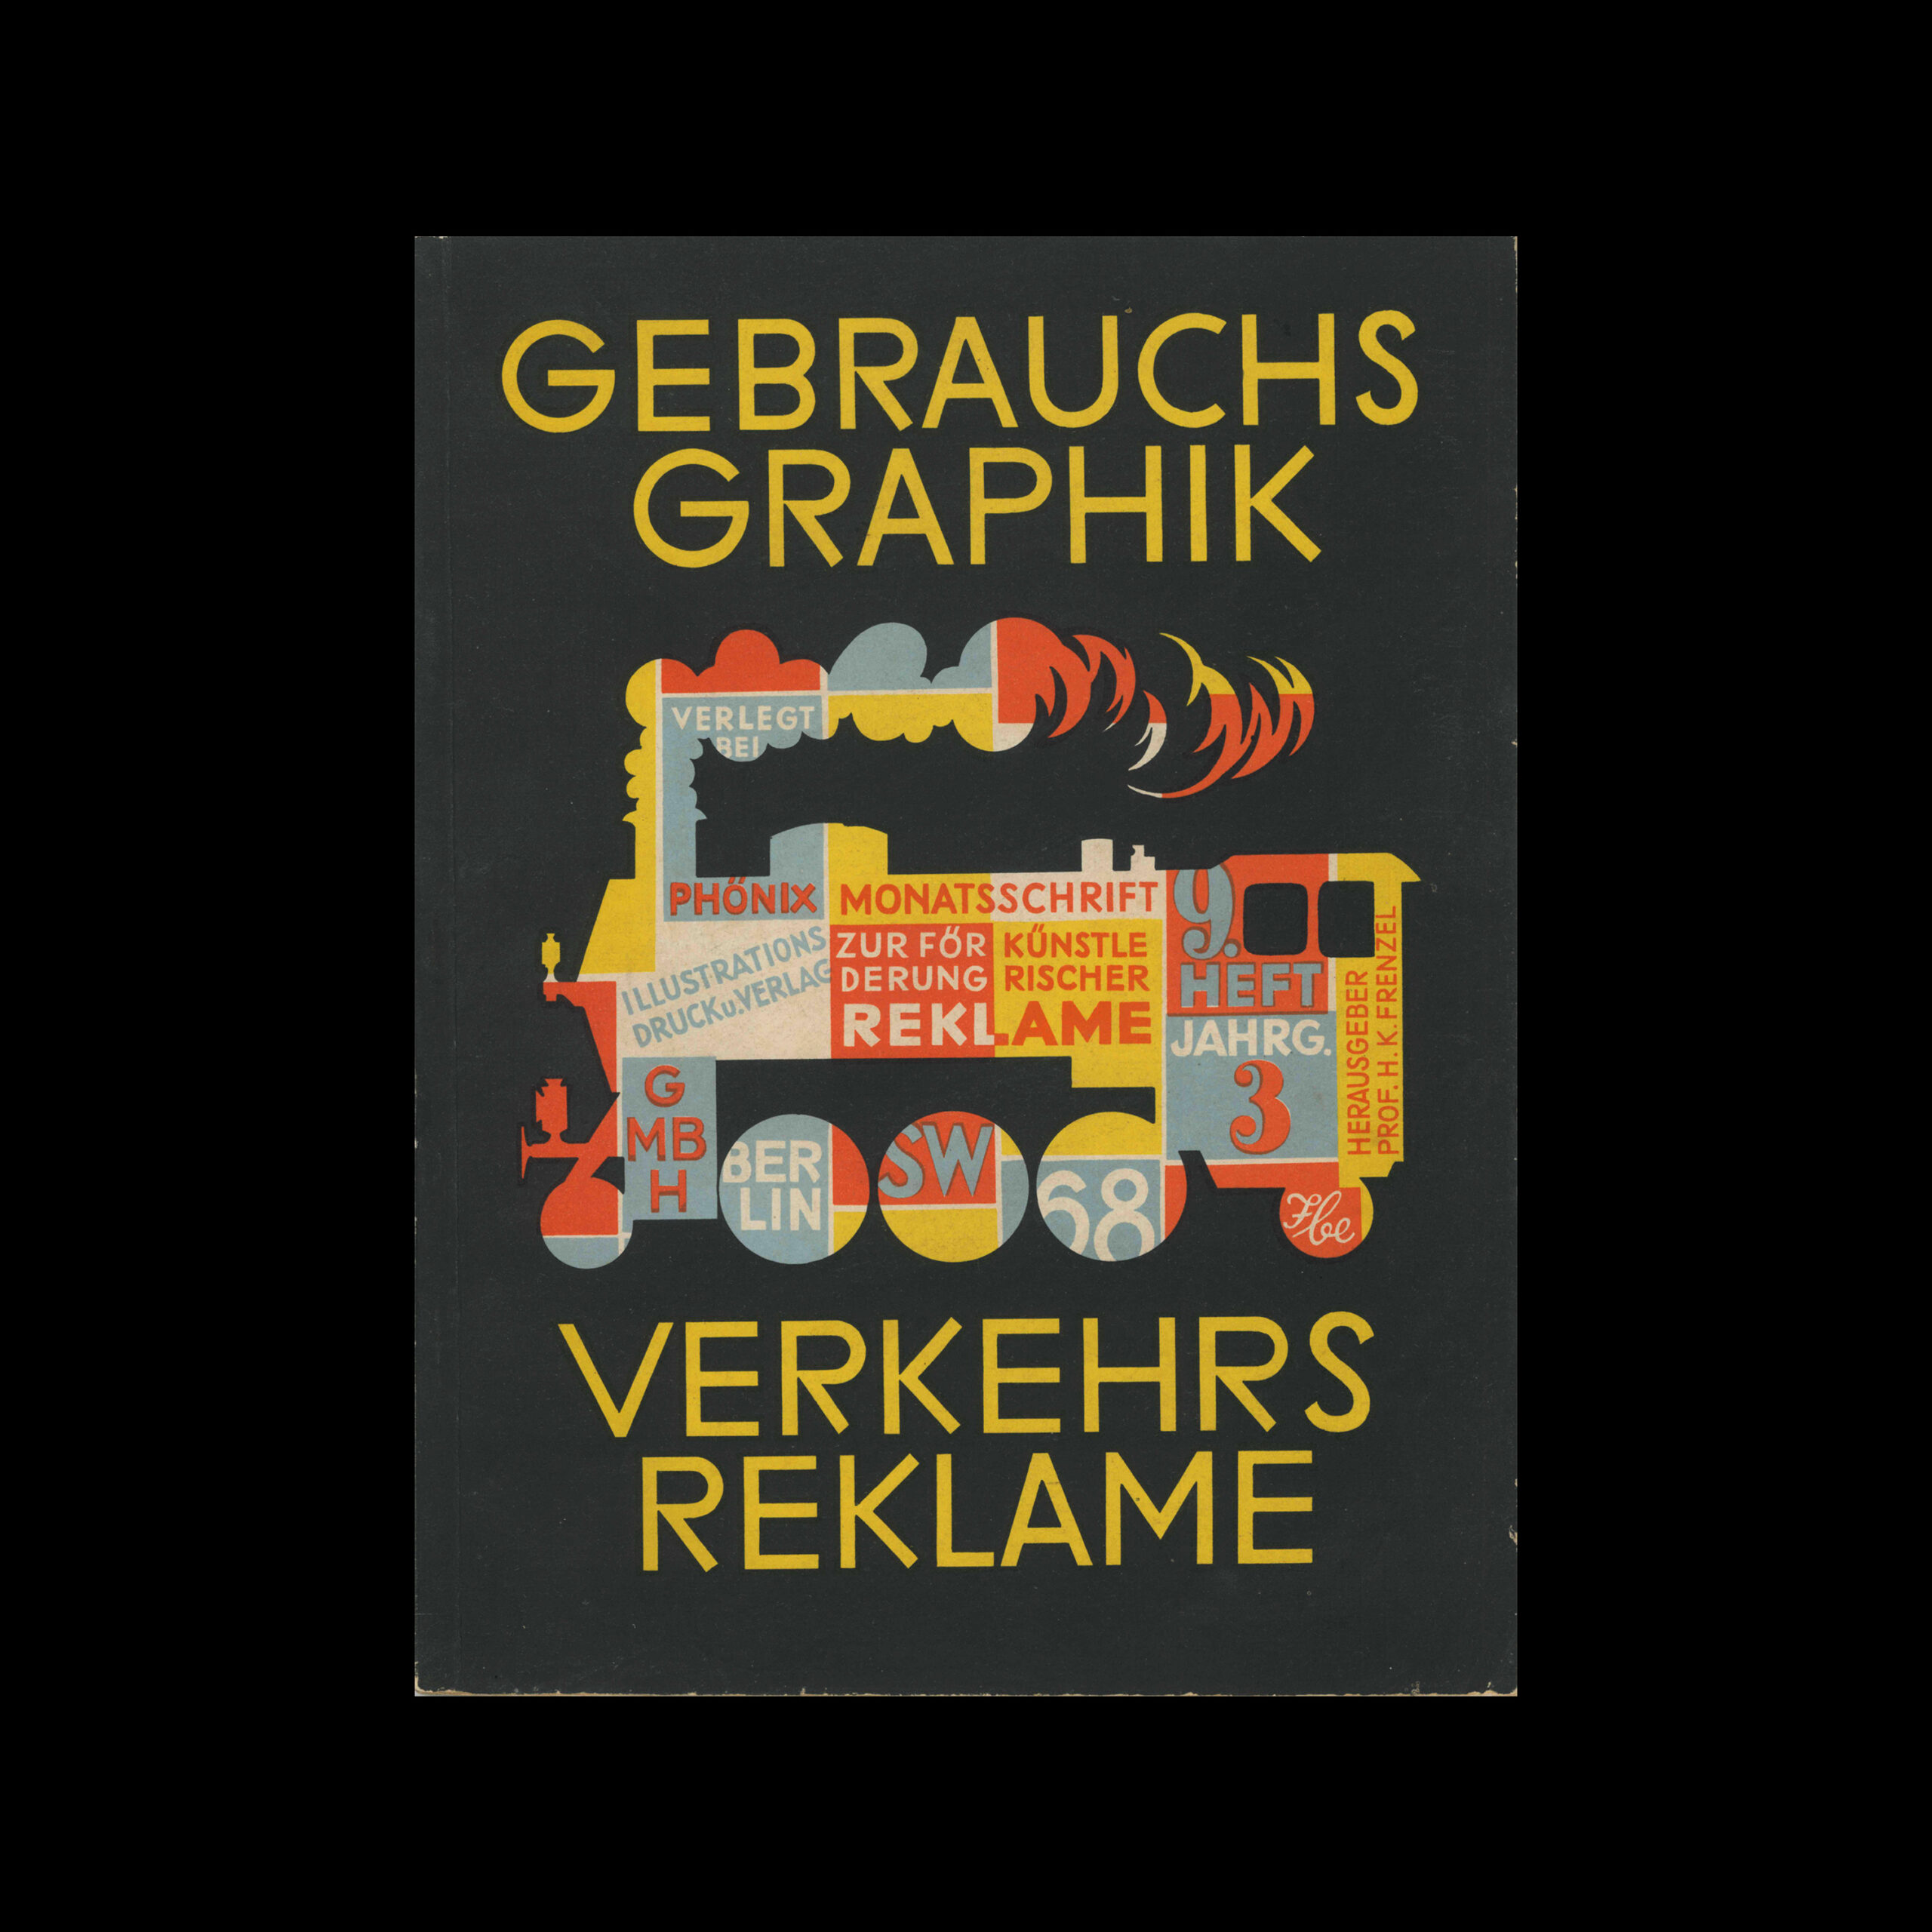 Gebrauchsgraphik, 09, 1926. Cover design by Hans Ibe